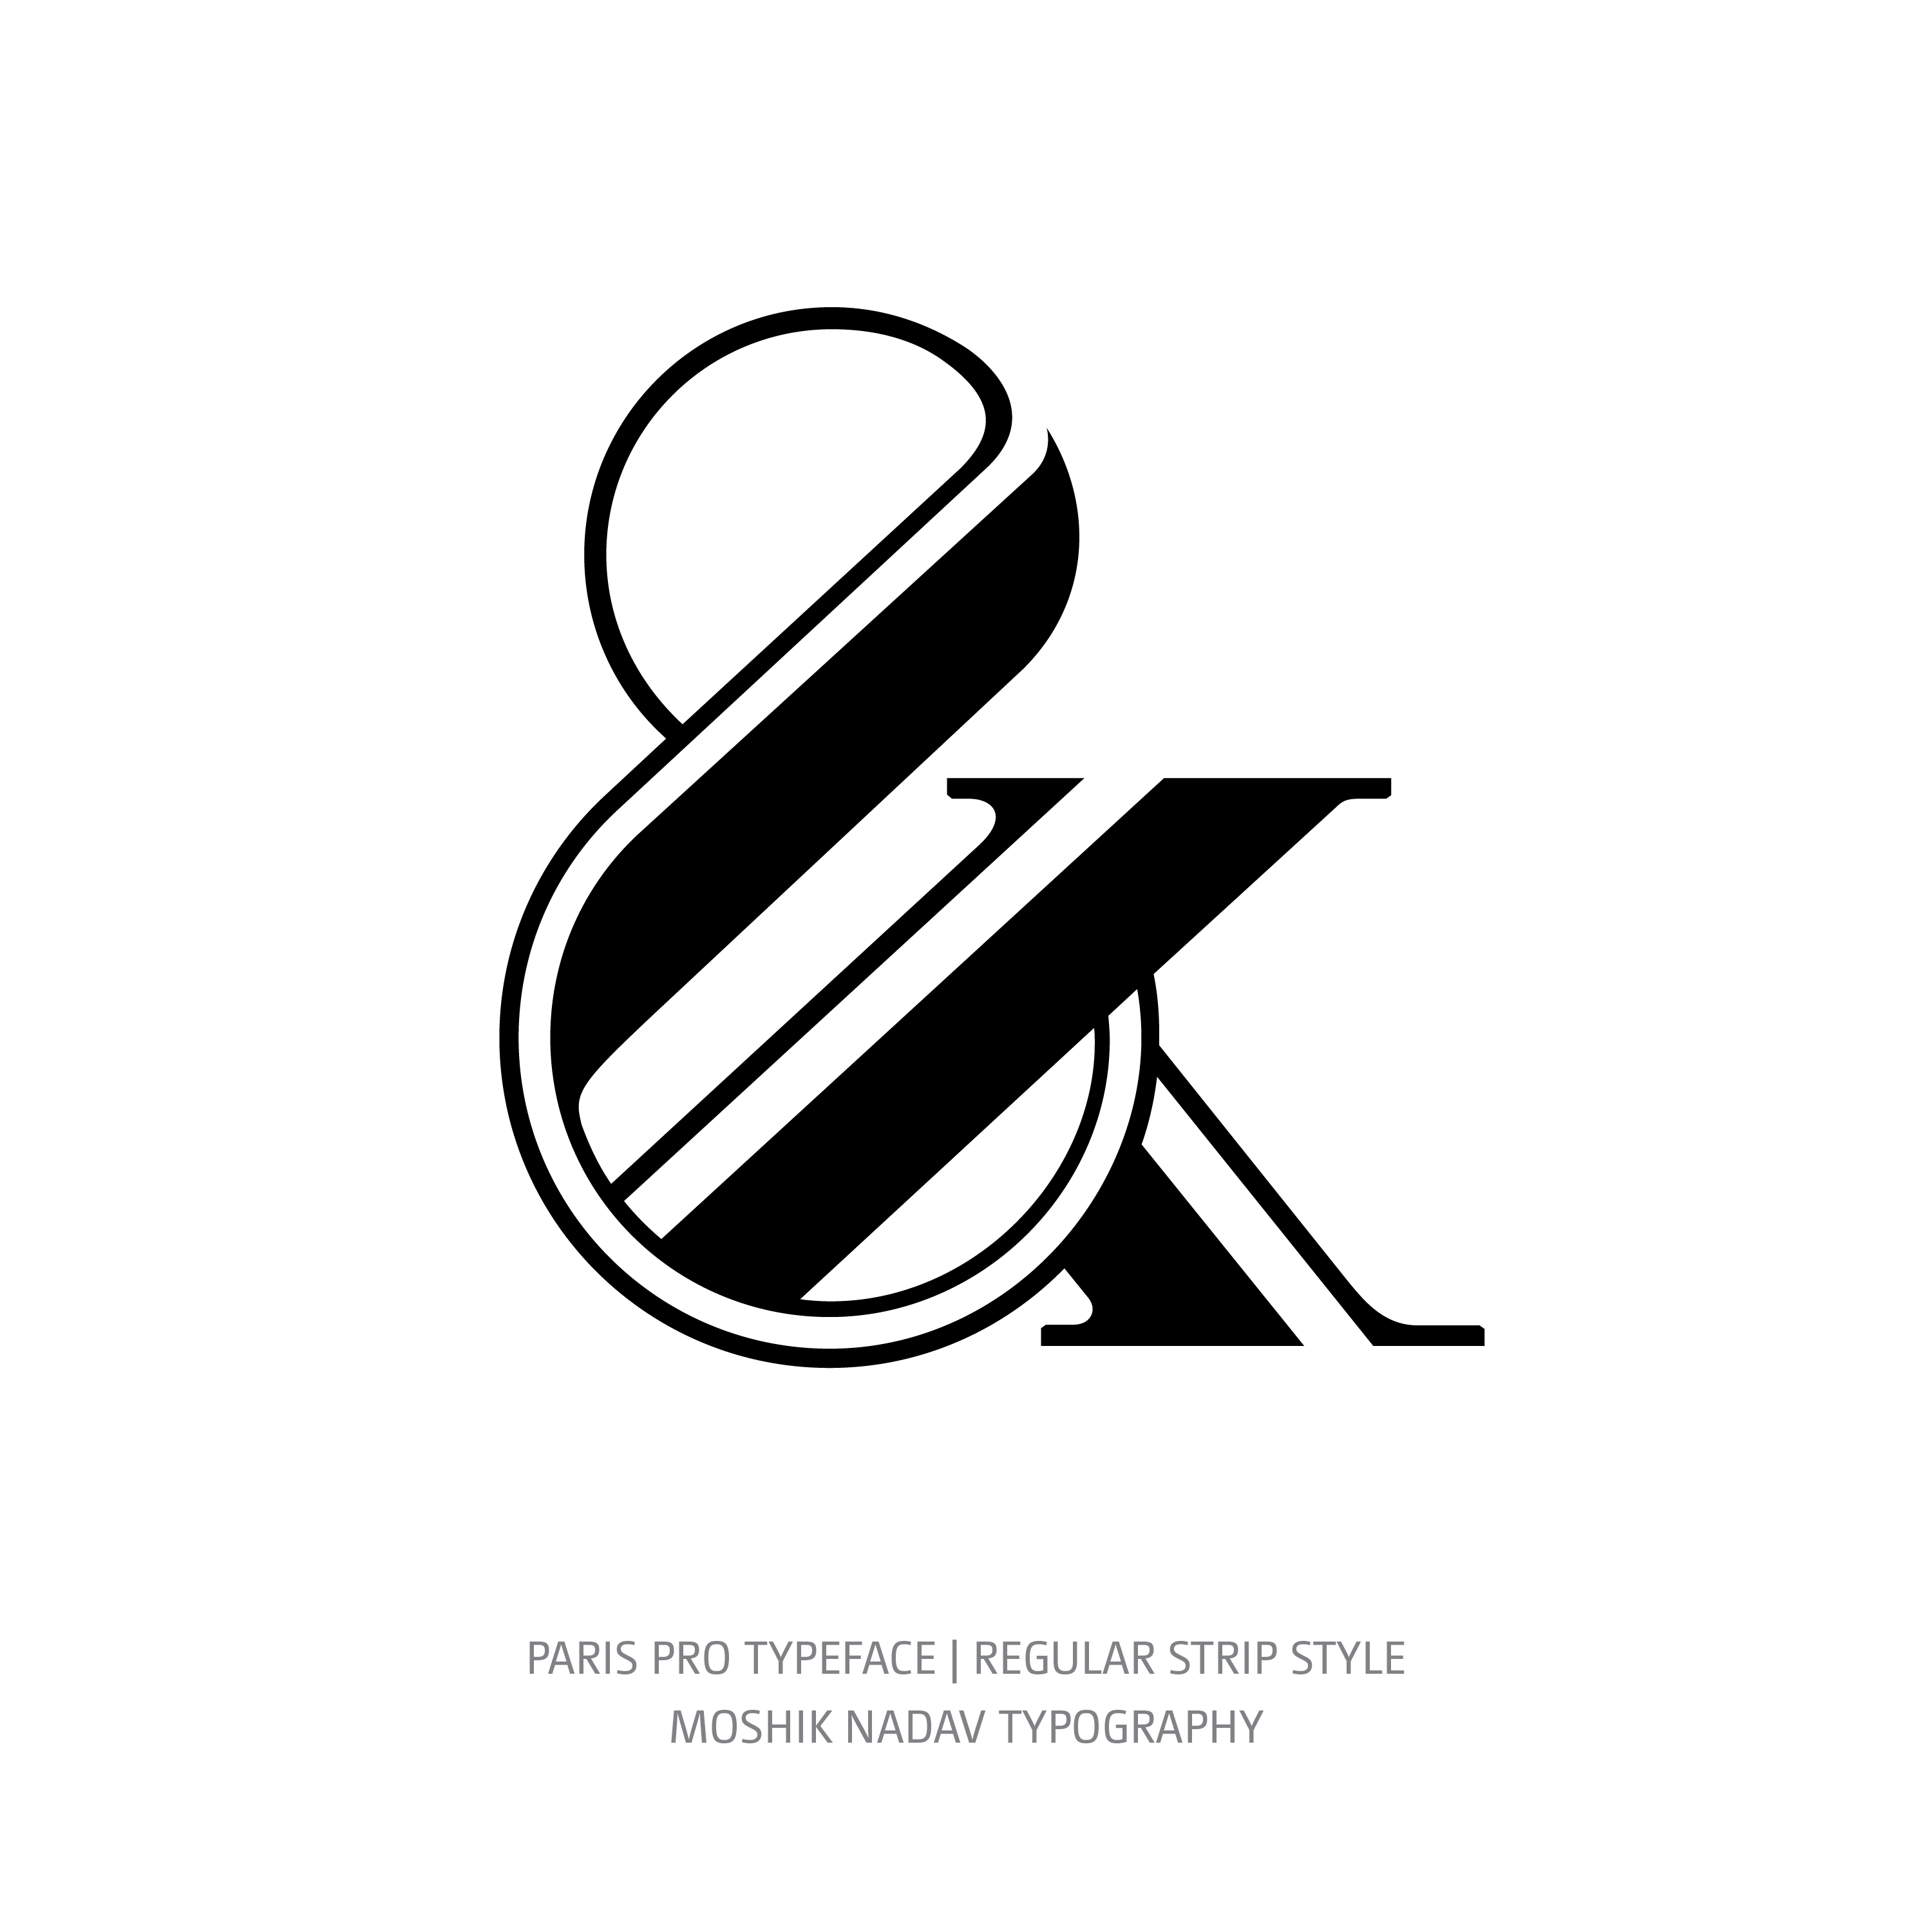 Paris Pro Typeface Regular Strip ampersand